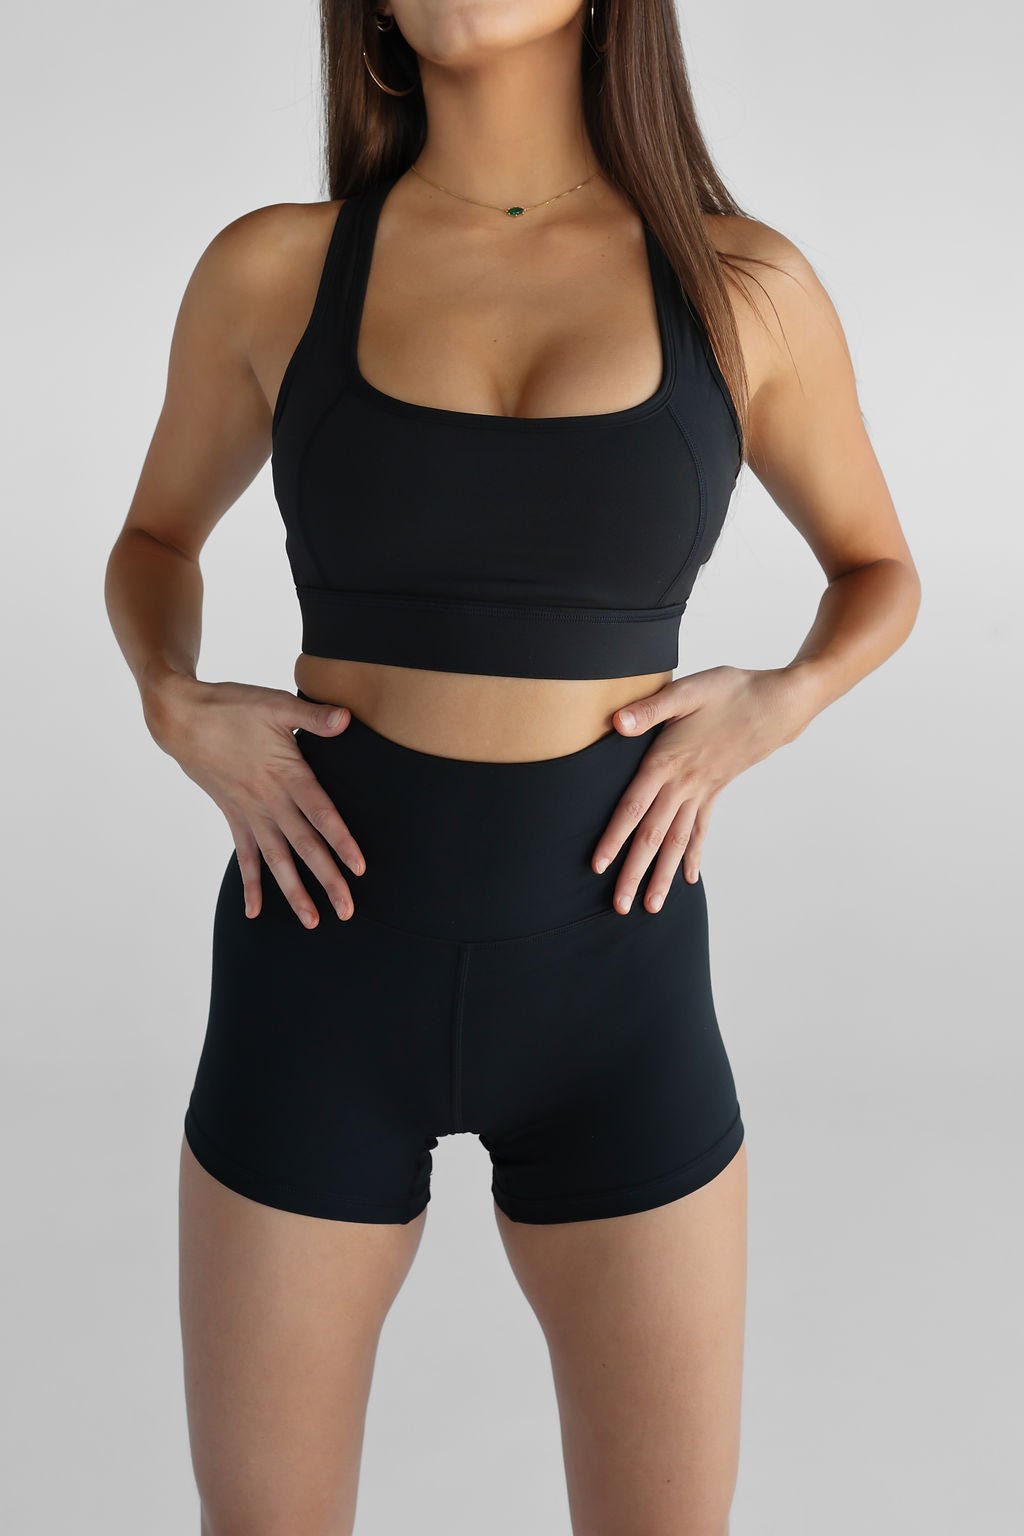 Booty Shorts - Black - LEELO ACTIVE